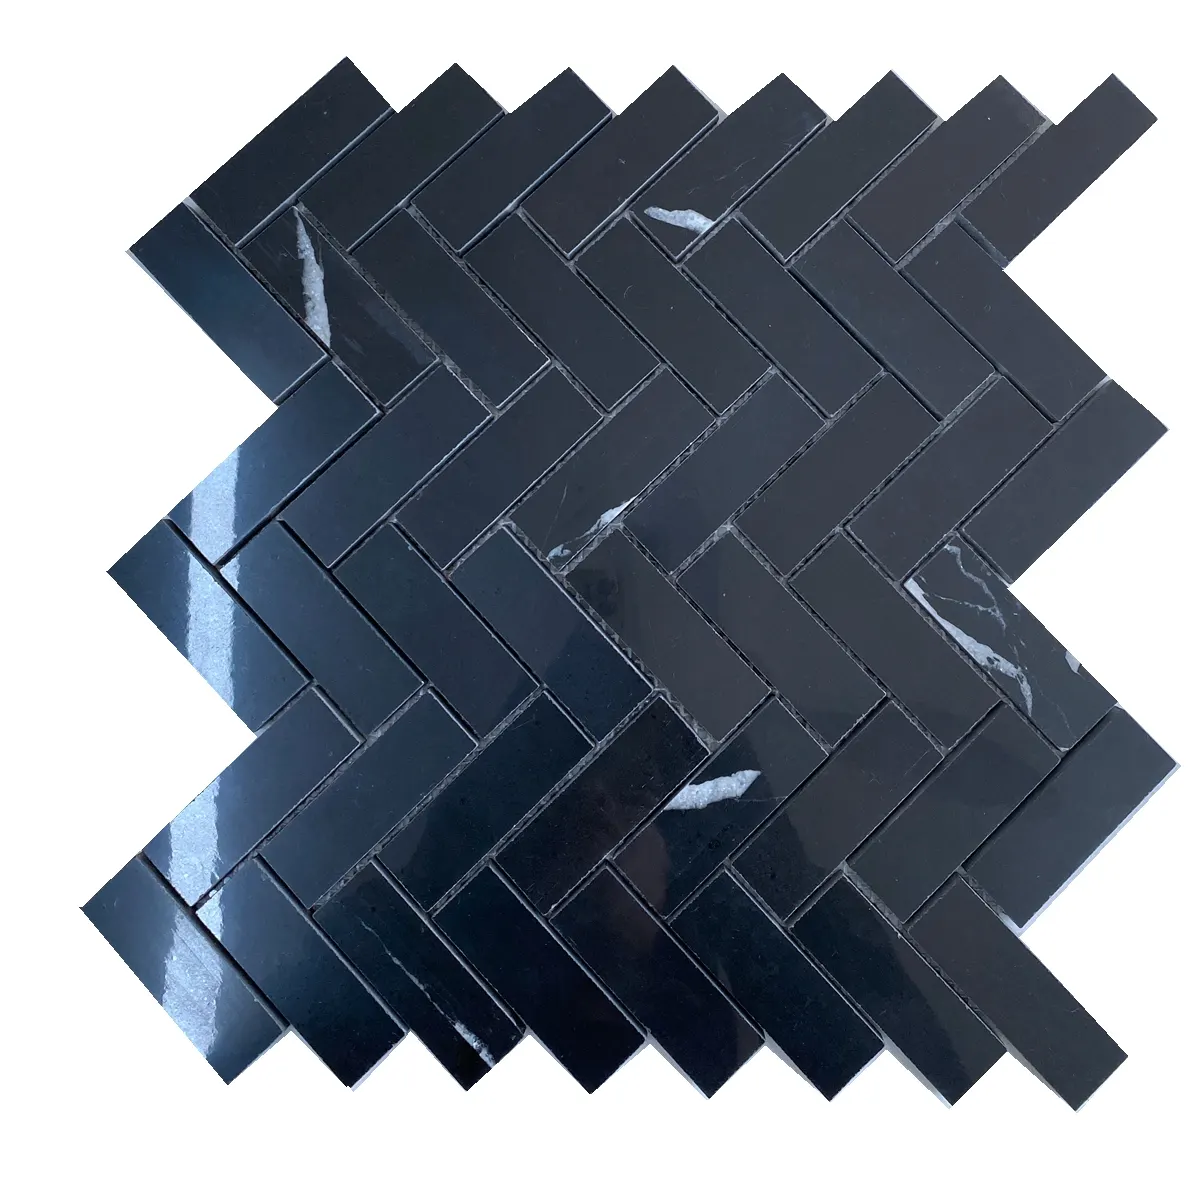 Black Marquina Marble Mosaic Flooring Tiles Nero Marquina For Bathroom Flooring And Kitchen Backsplash